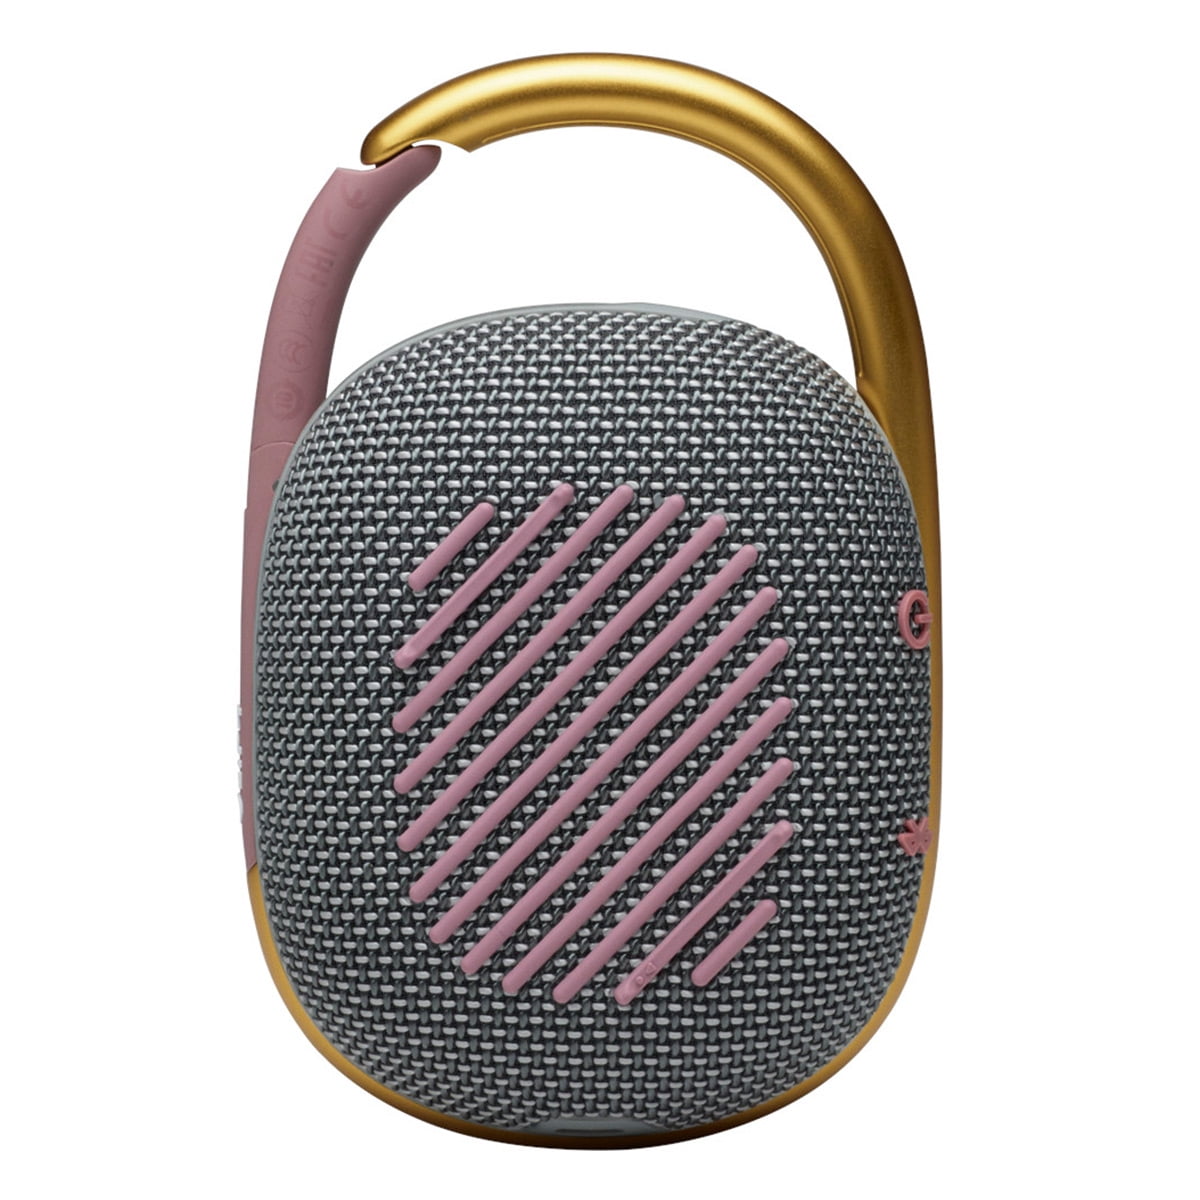 JBL Clip 4 Portable Bluetooth Waterproof Speaker (Grey) 